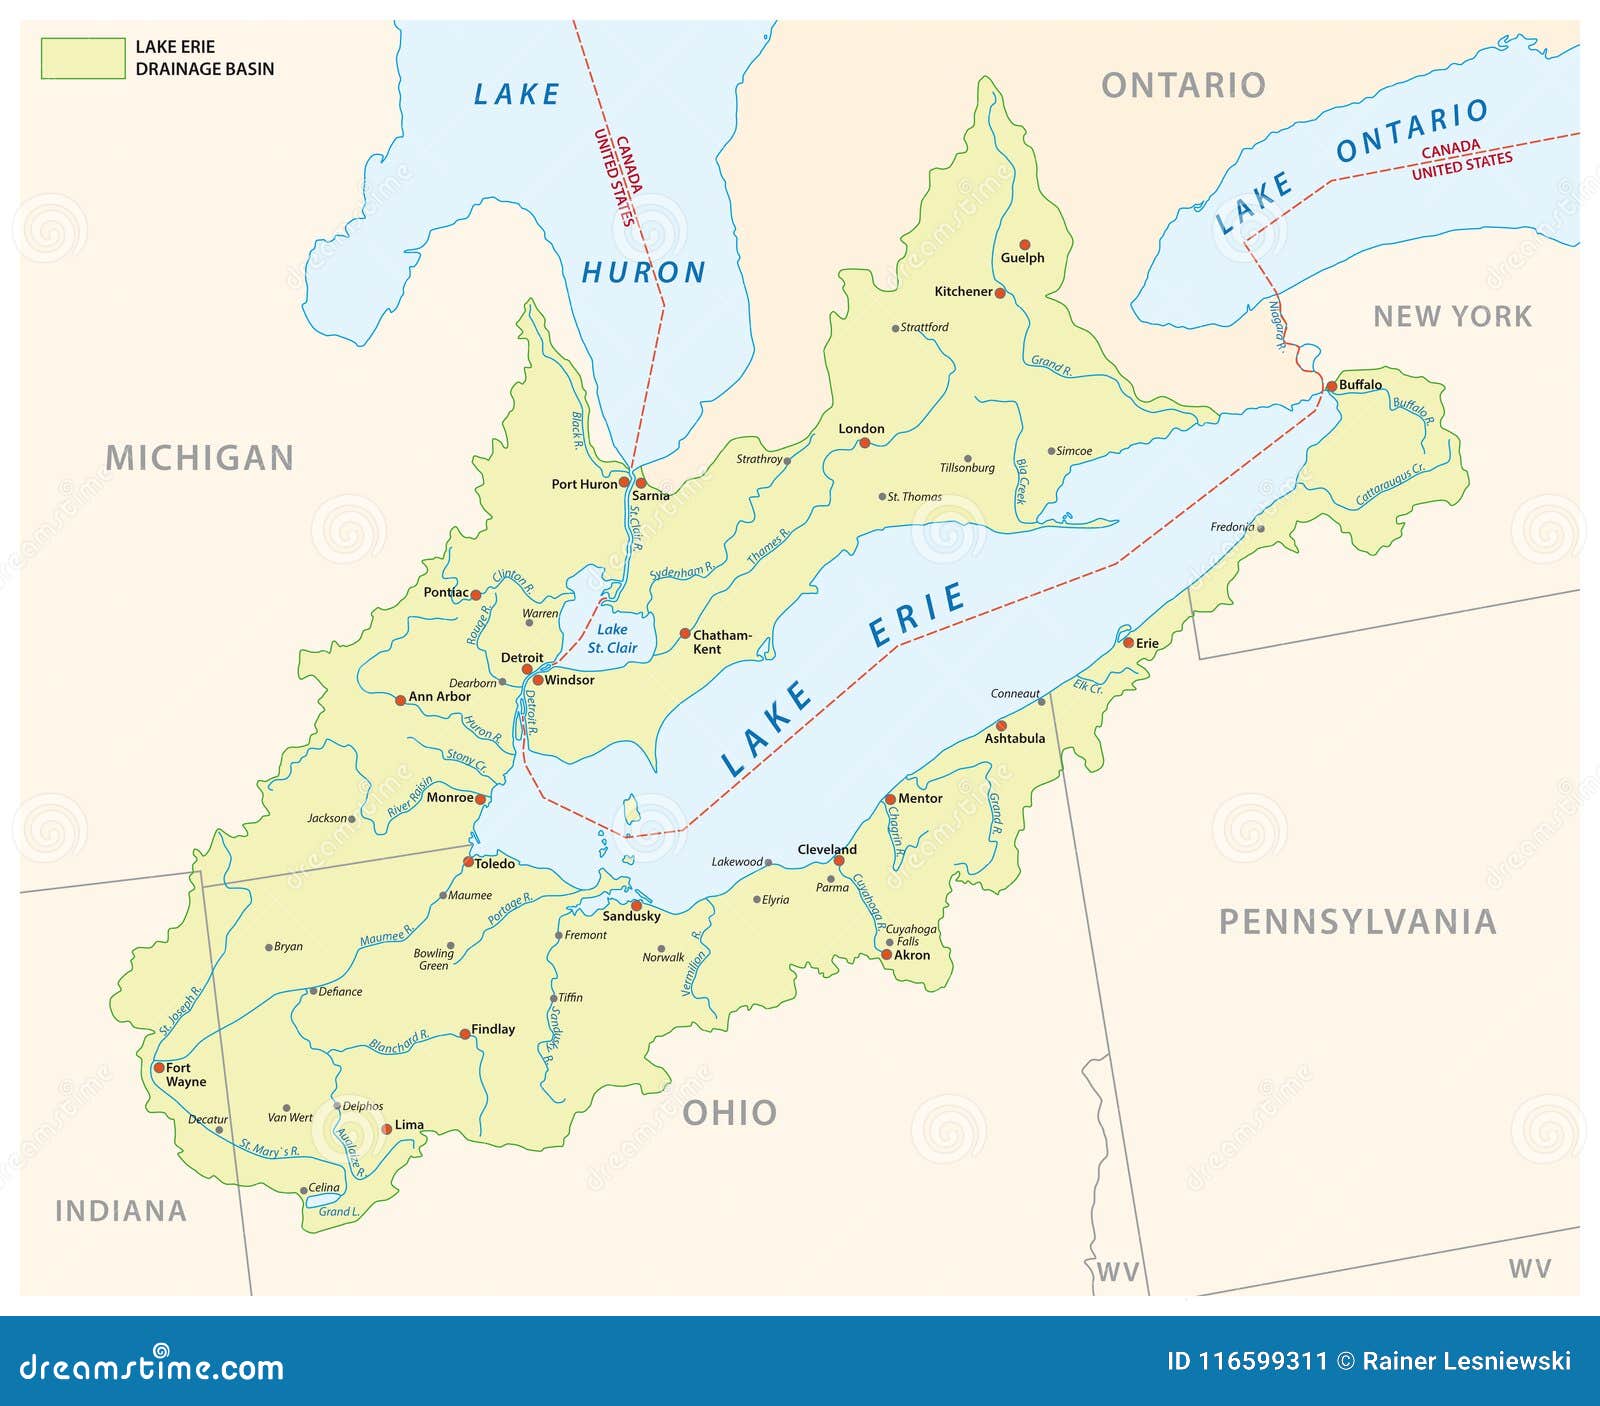 lake erie drainage basin  map